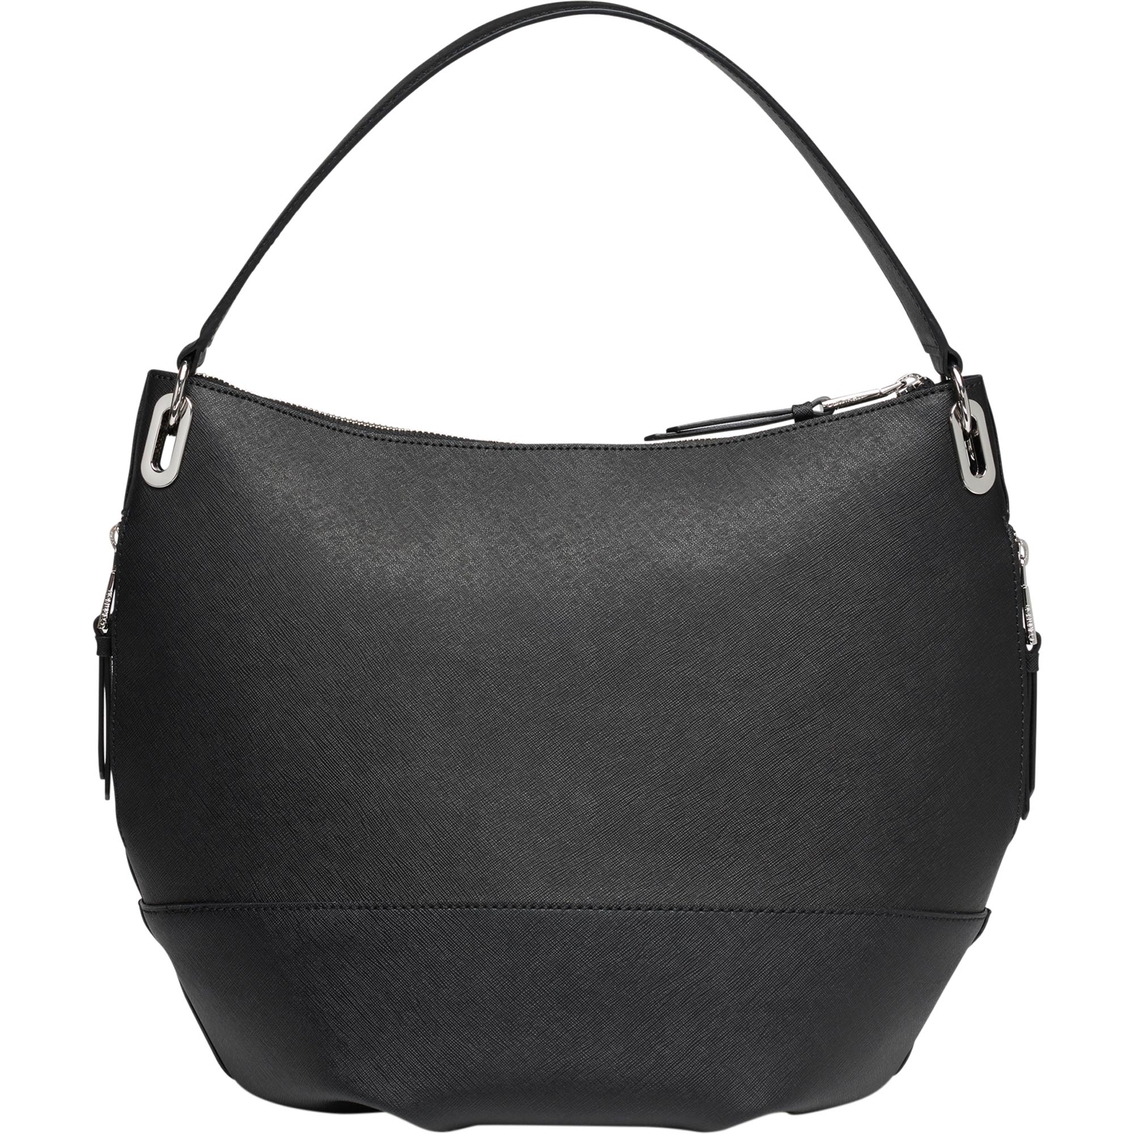 Calvin Klein Saffiano Leather Mercy Hobo Handbag - Image 2 of 6